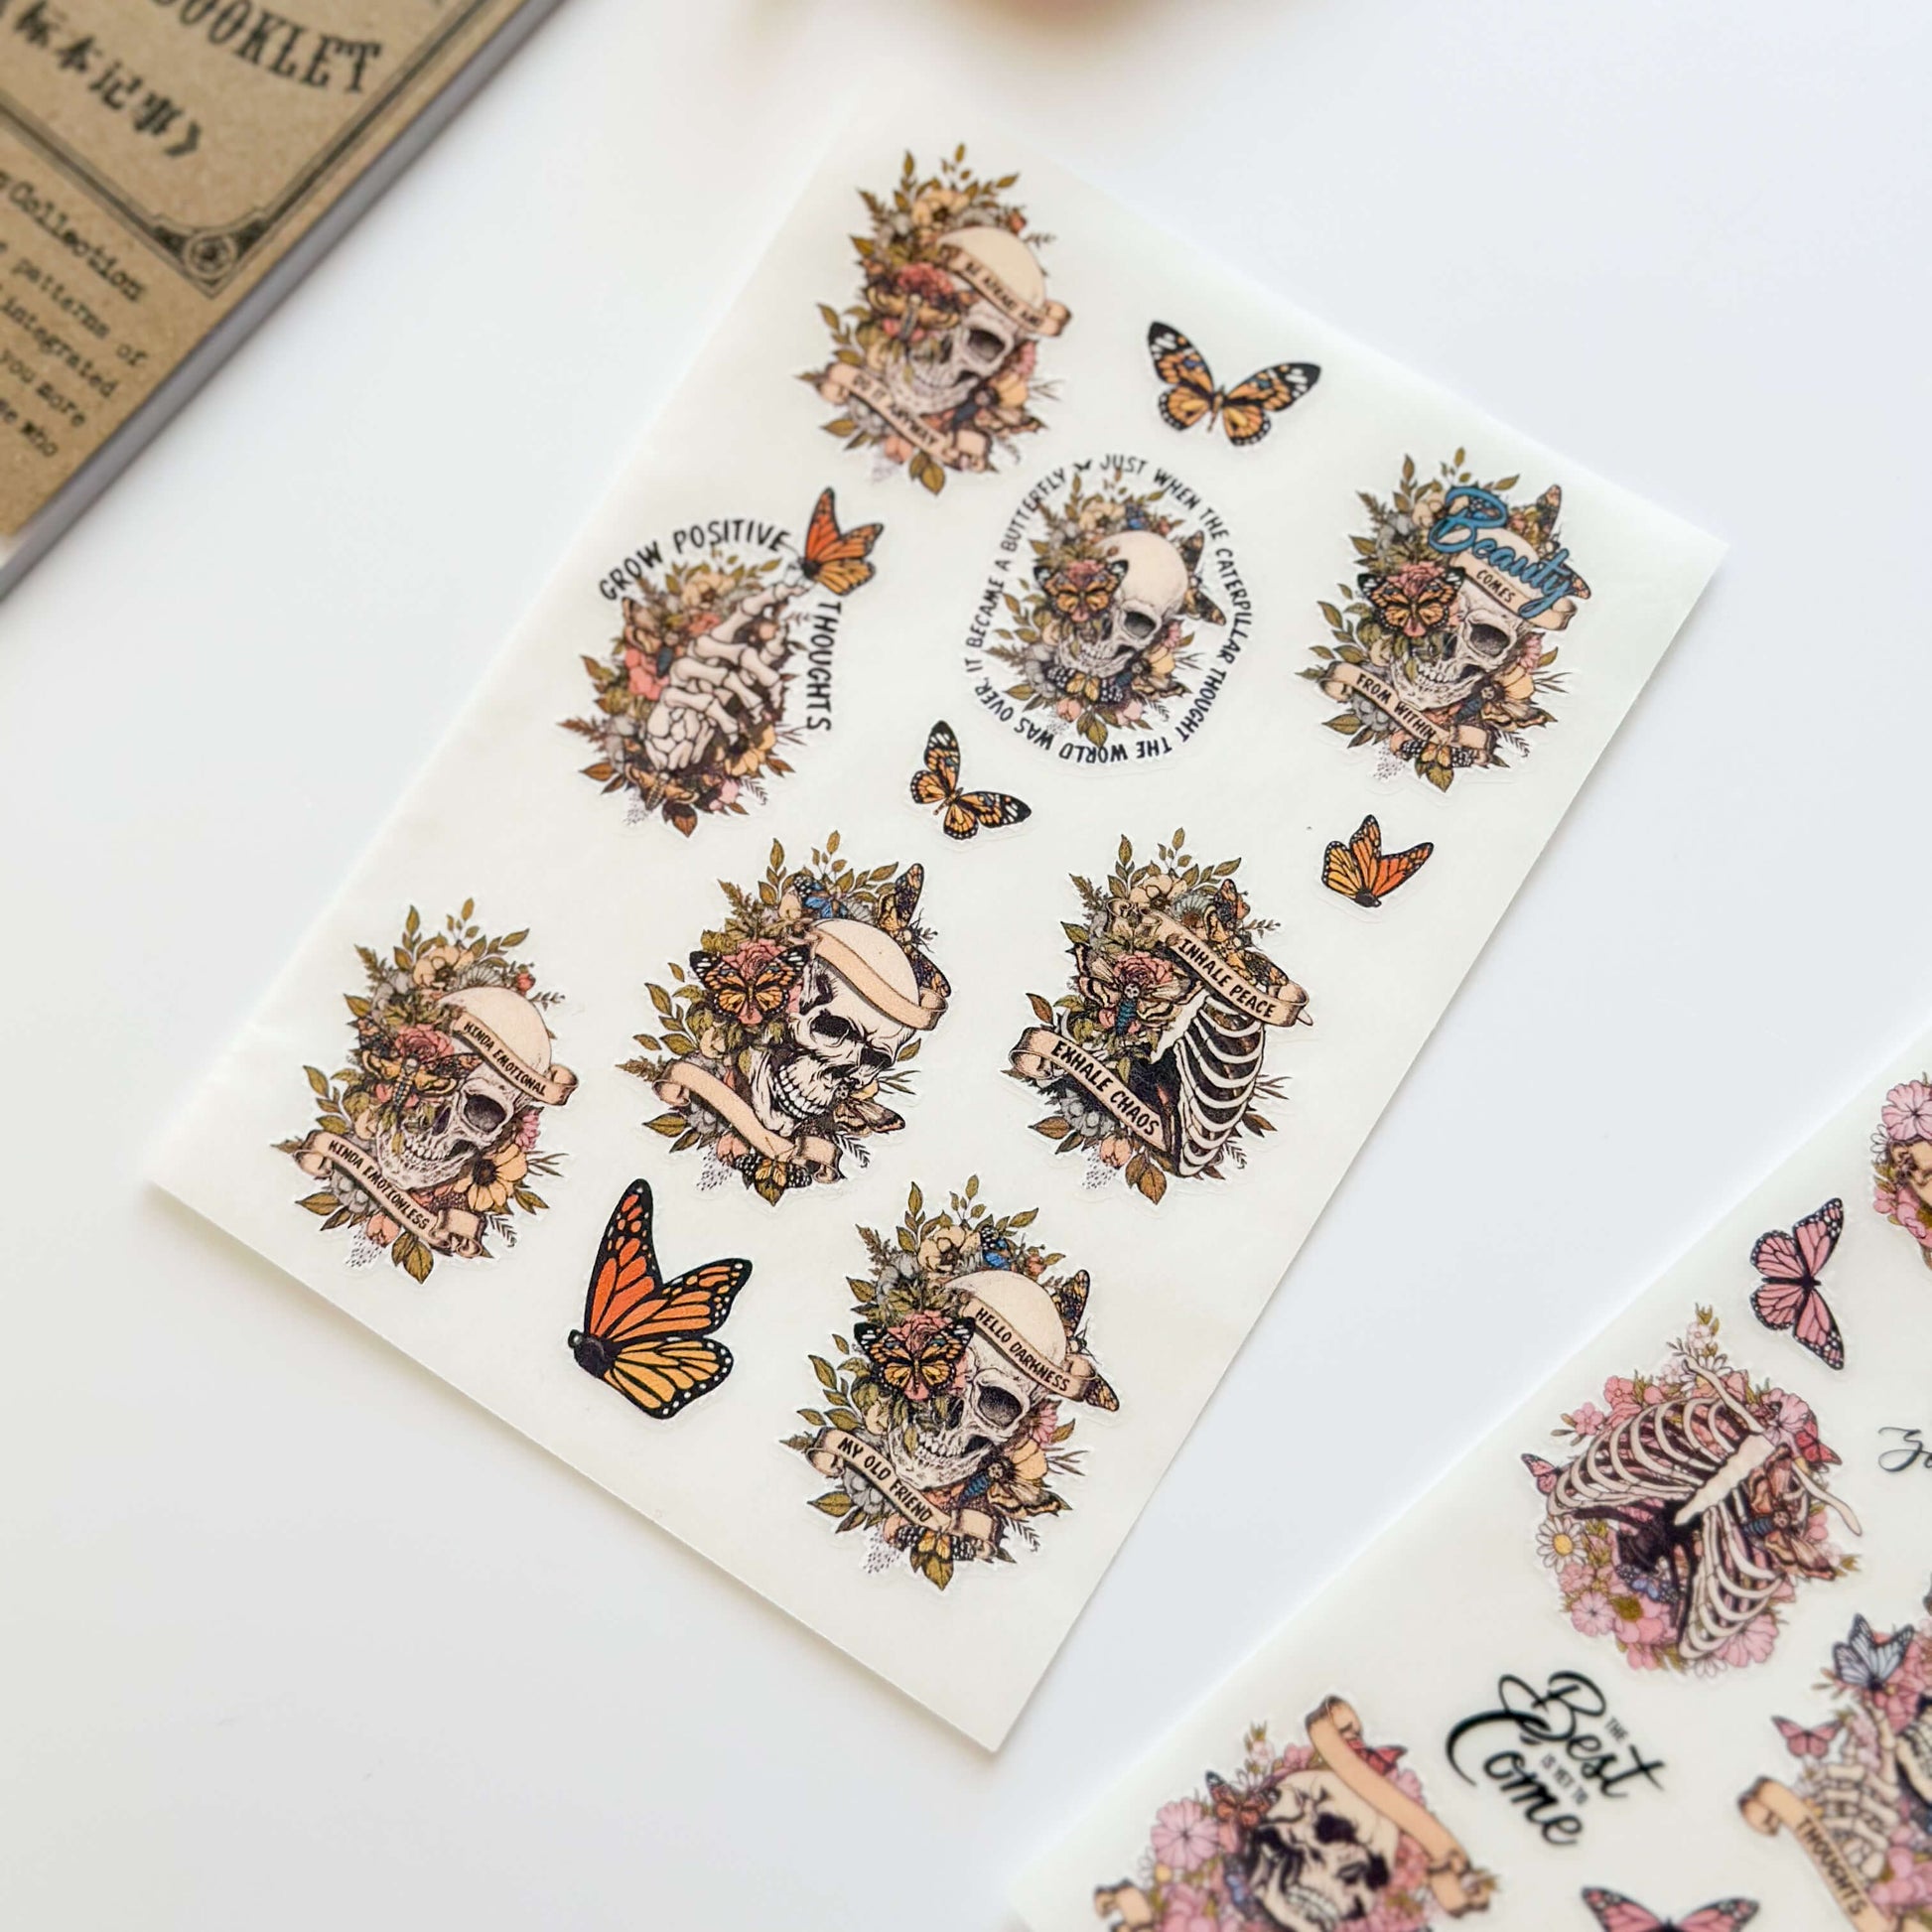 Sticker sheet with orange butterflies and skulls illustrations